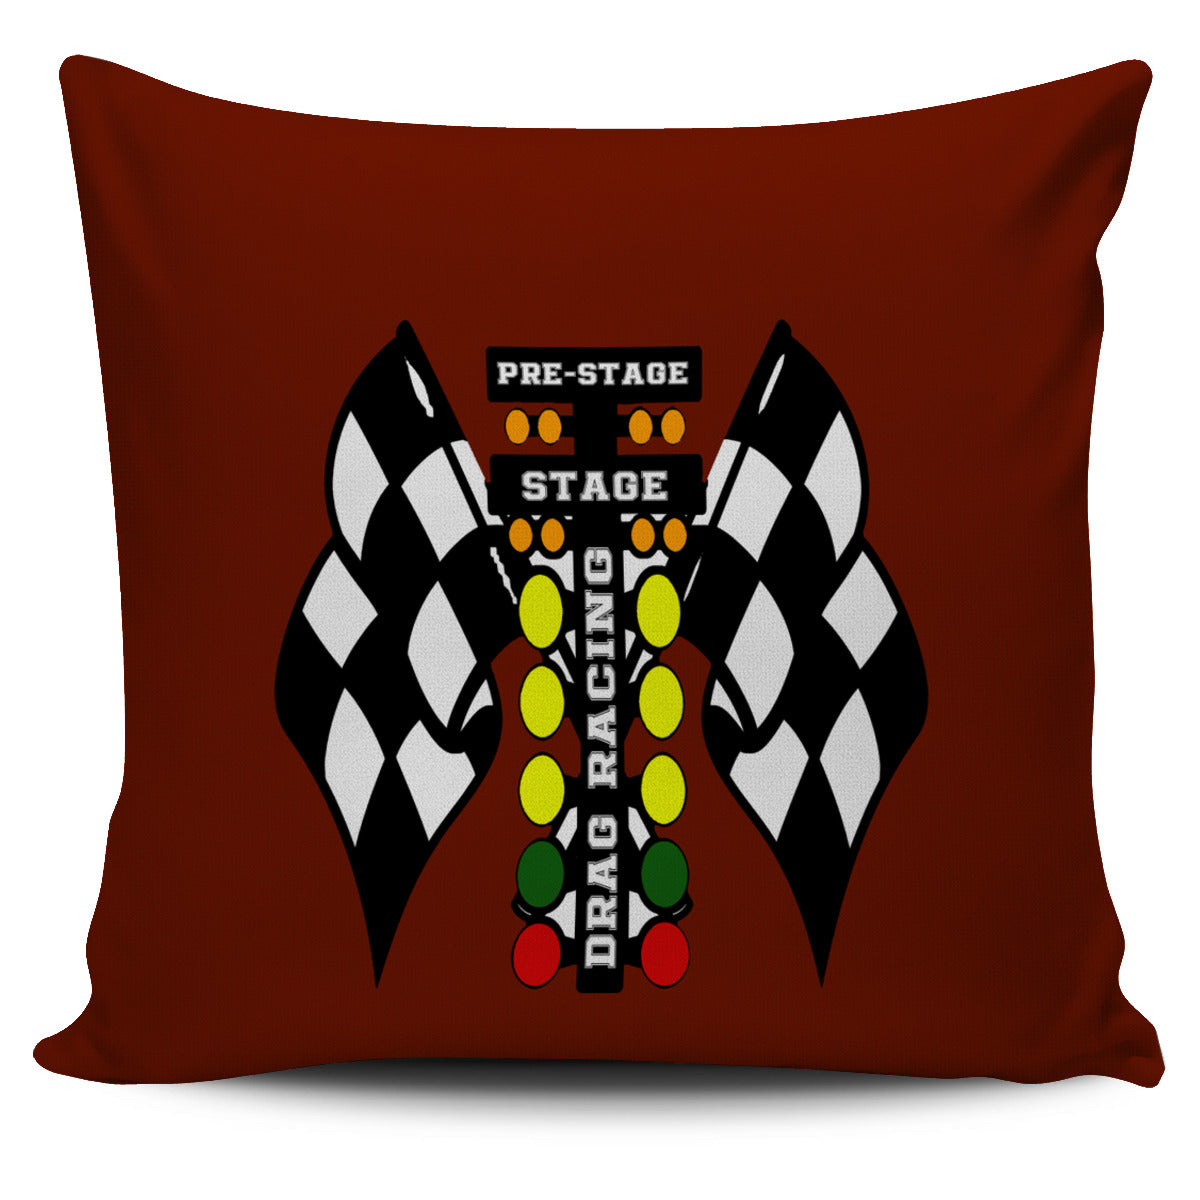 Drag Racing Pillow Covers Maroon